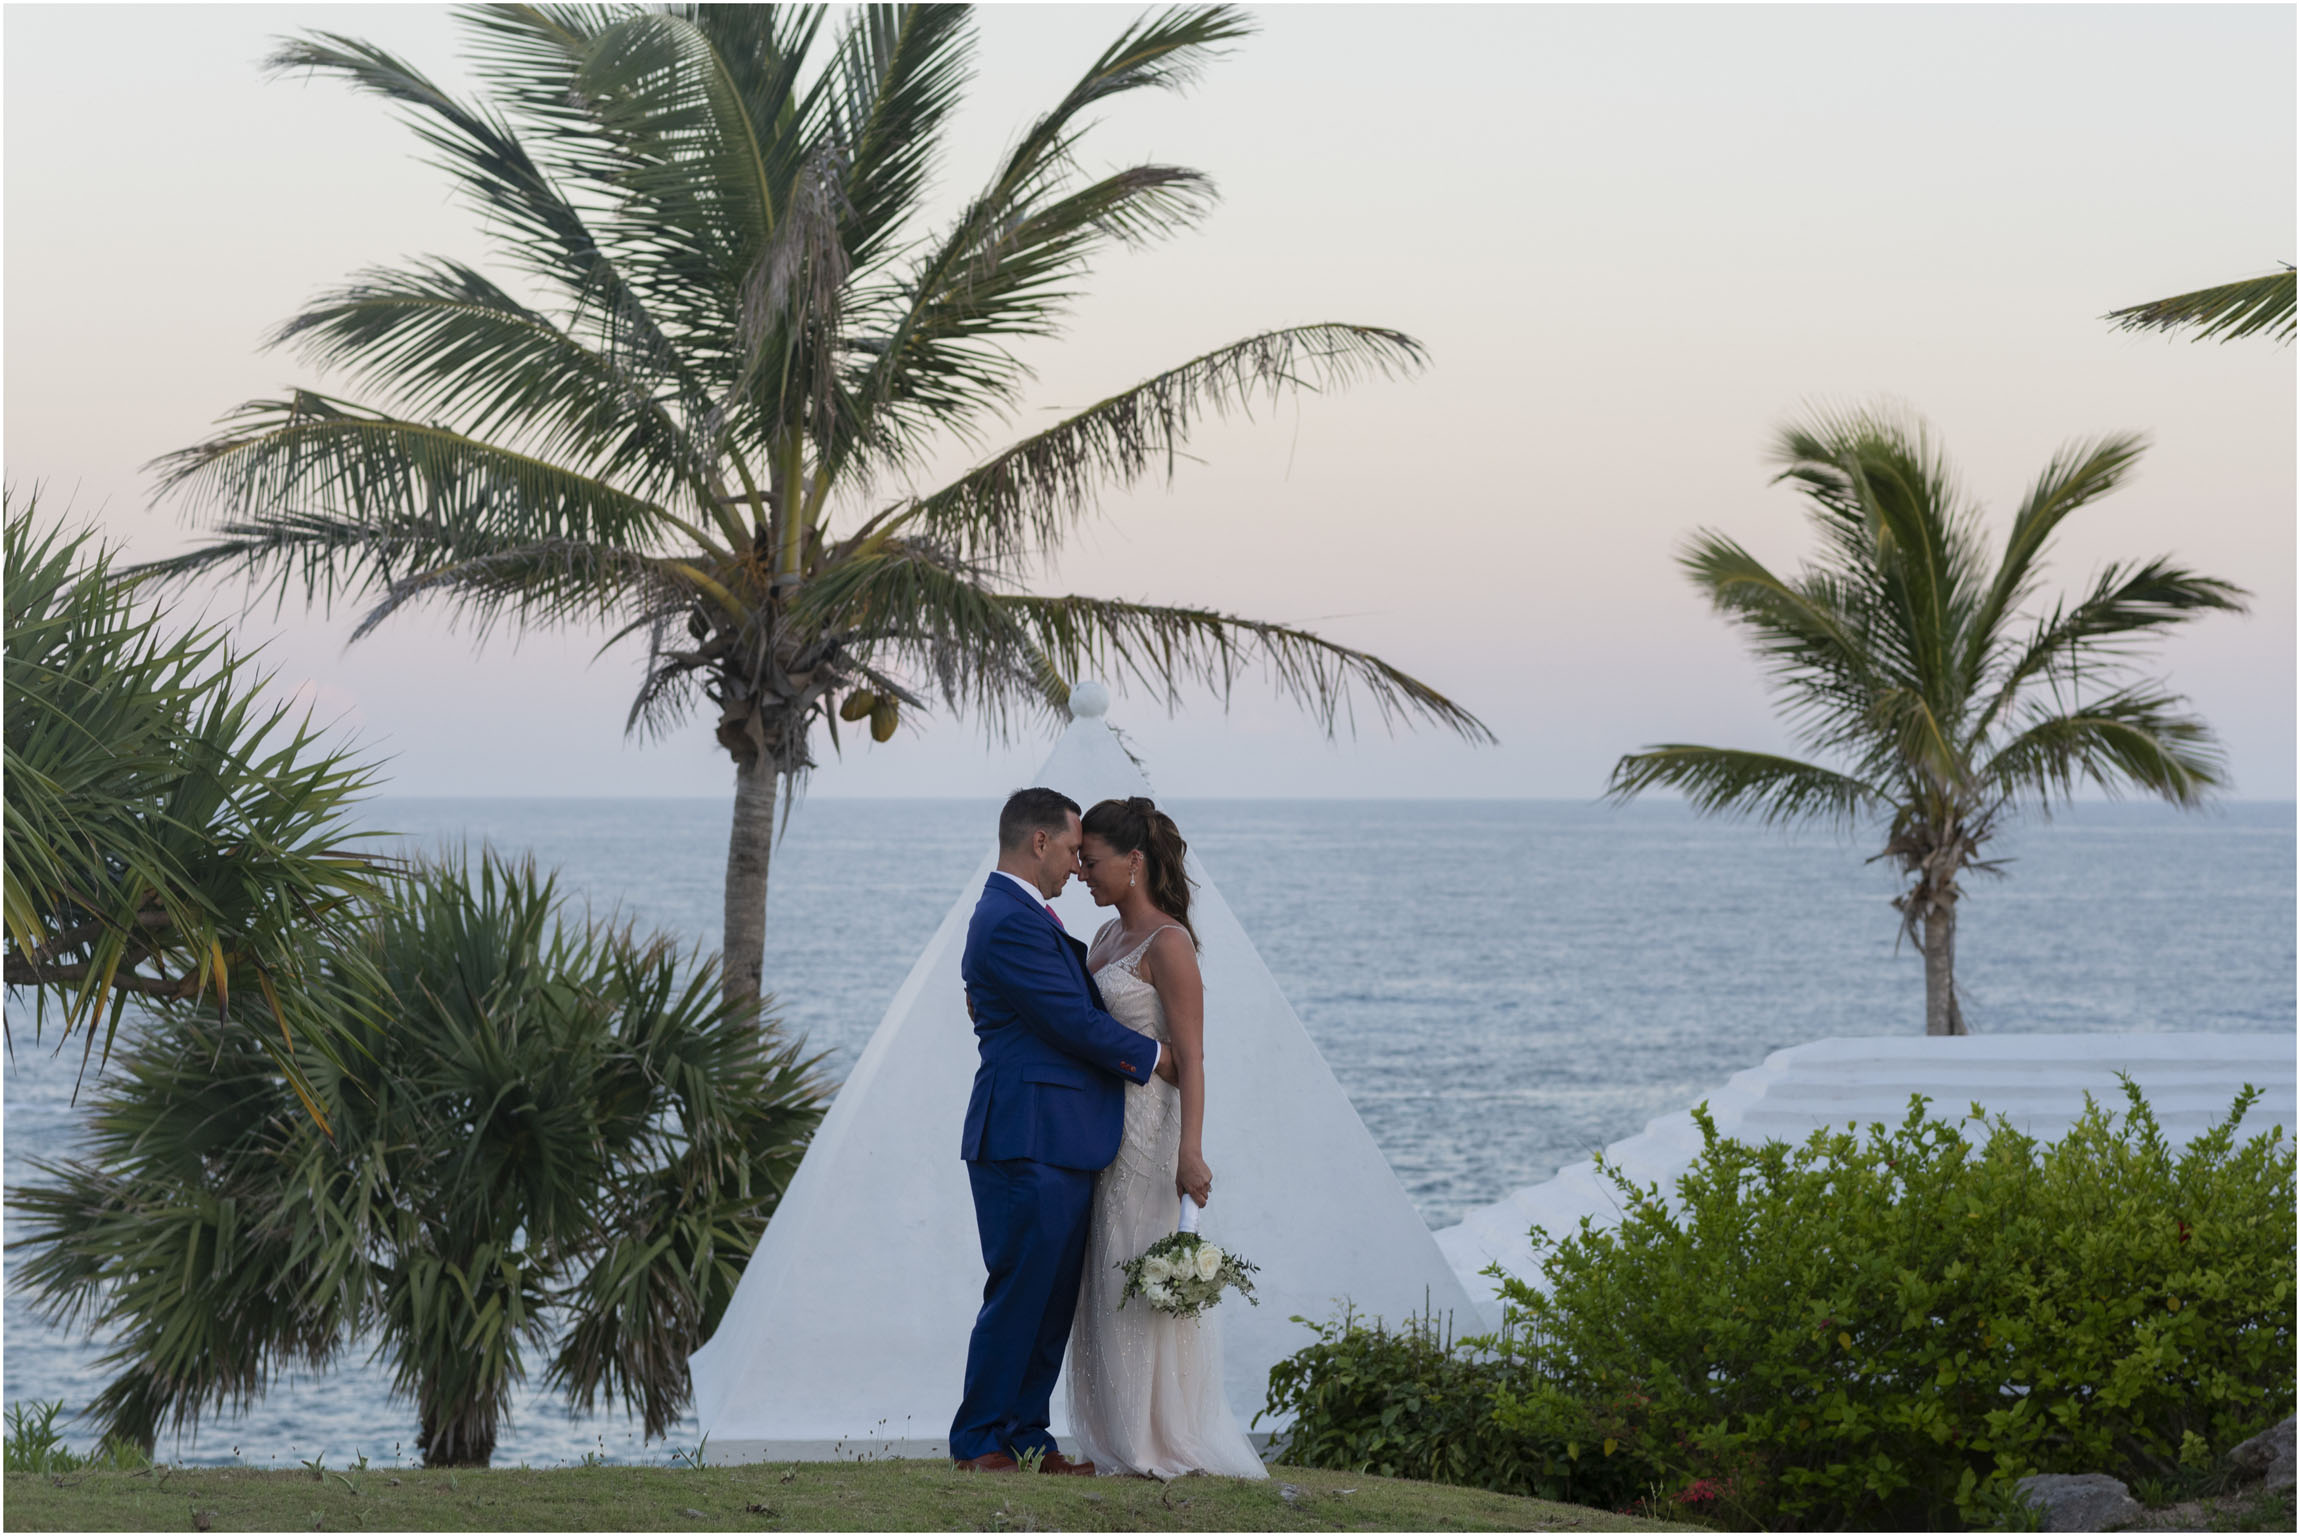 ©FianderFoto_Catherine_Kenny_Coral+Beach+Wedding_188.jpg